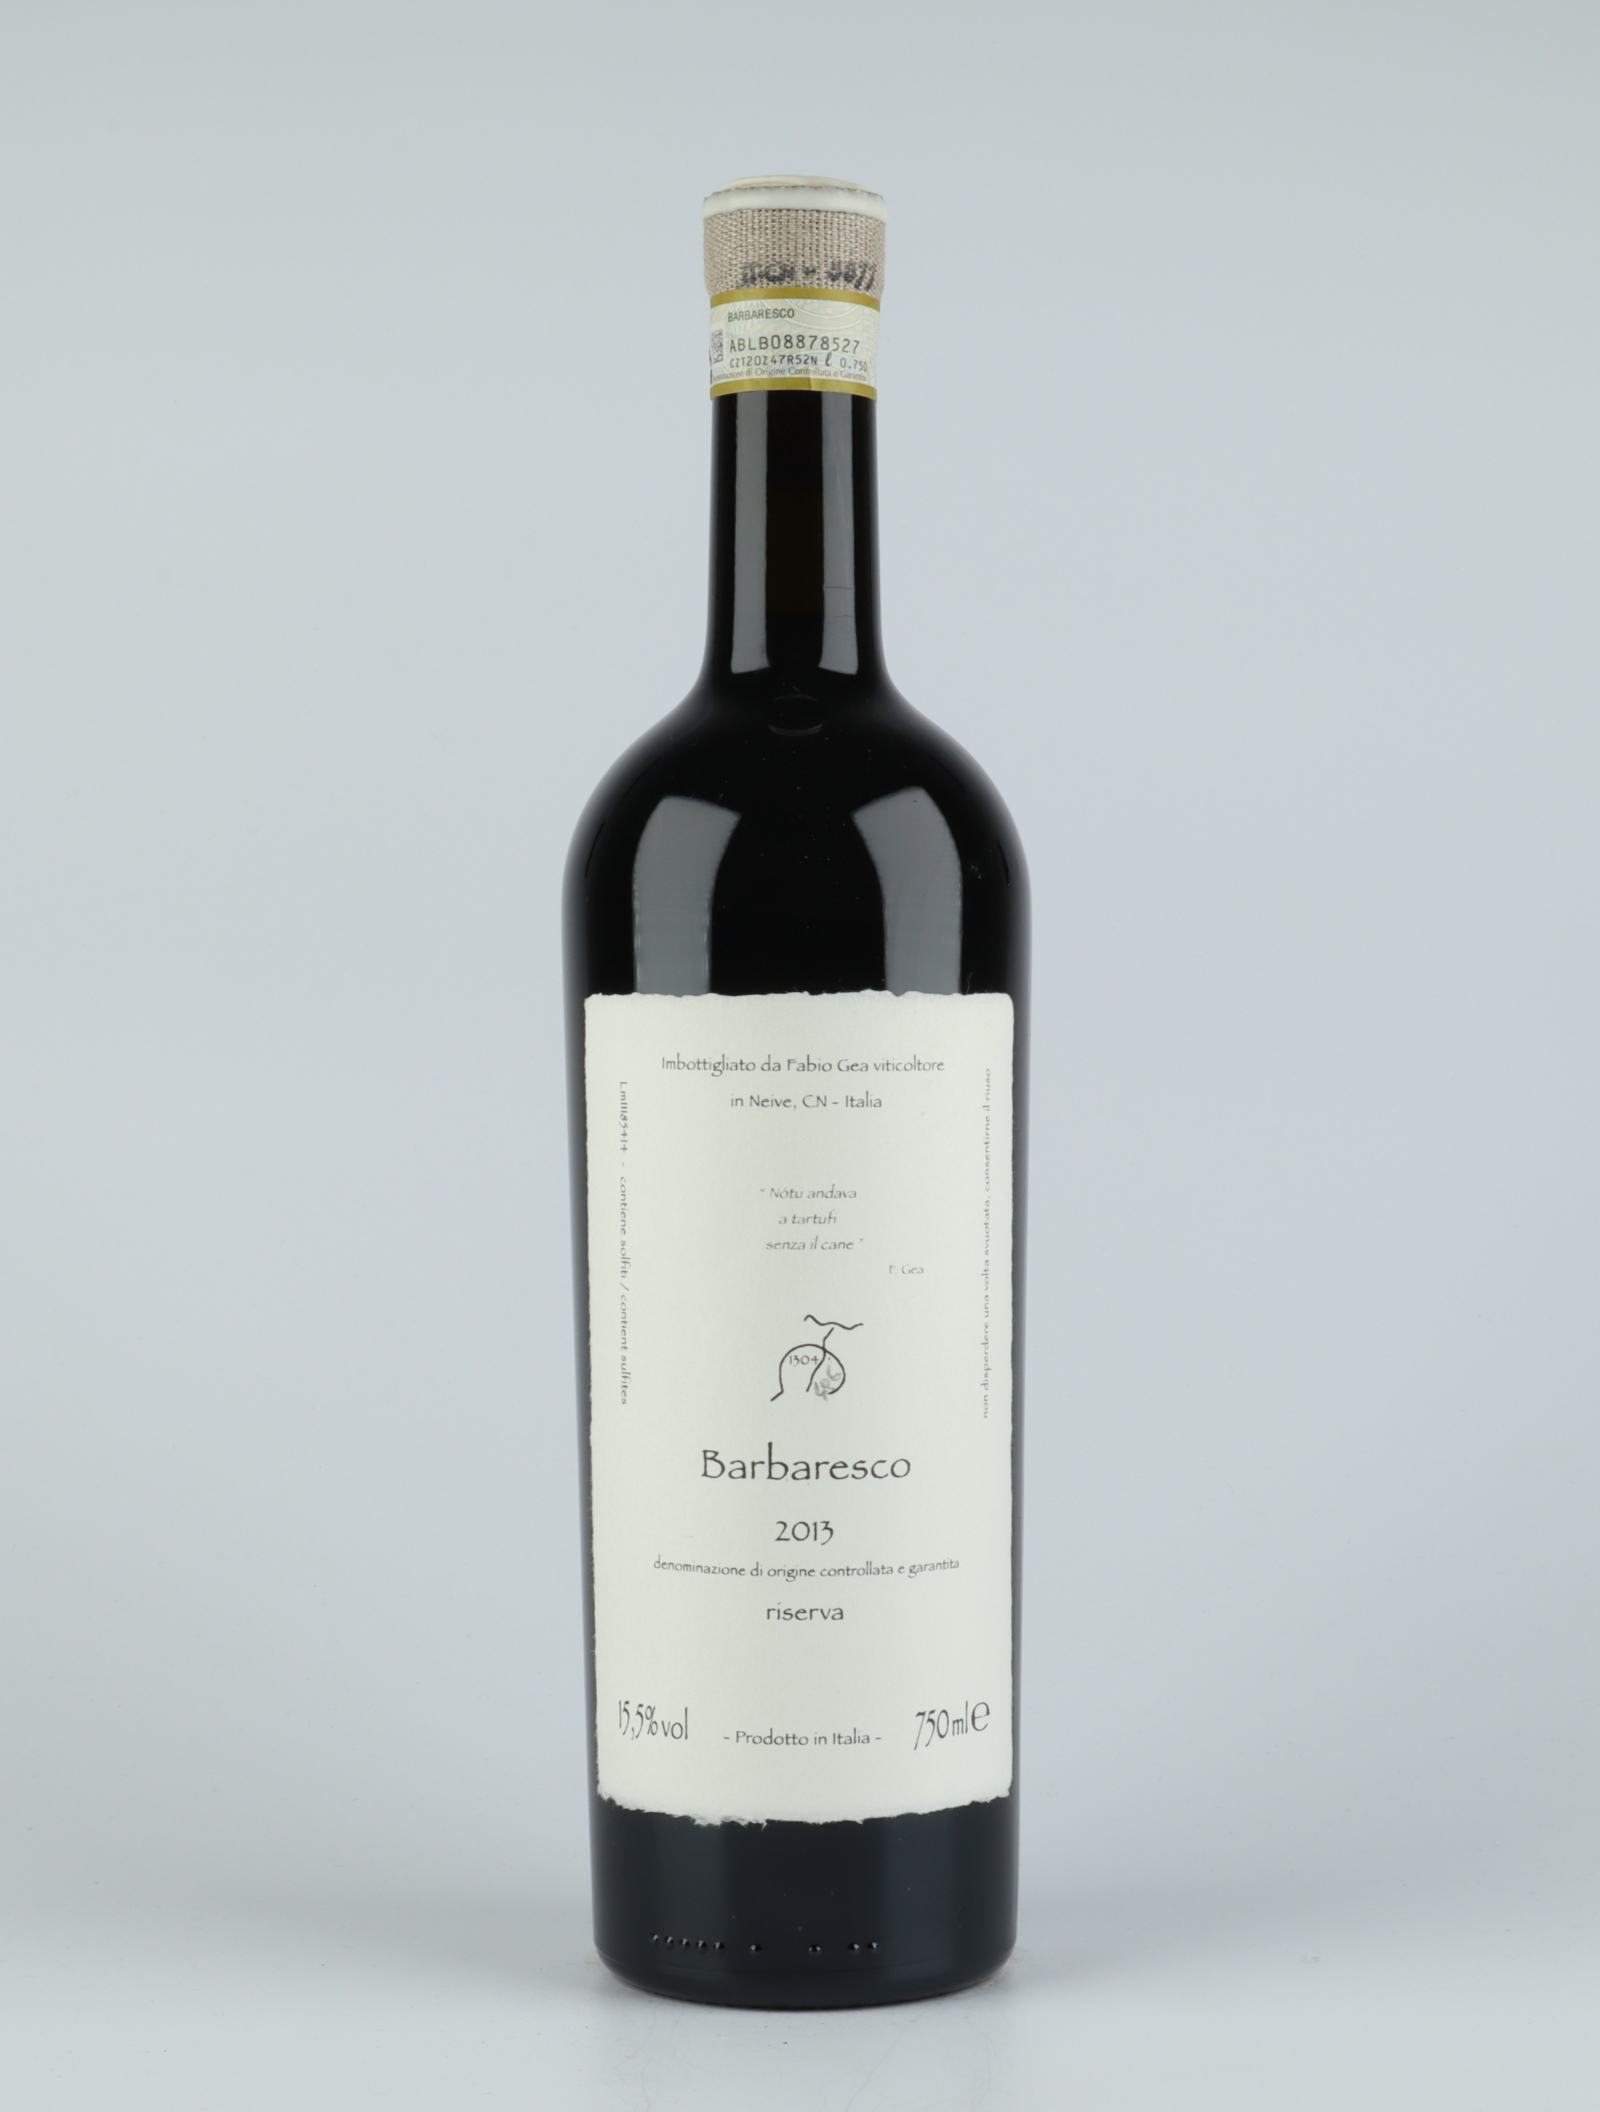 A bottle 2013 Barbaresco Riserva Red wine from Fabio Gea, Piedmont in Italy